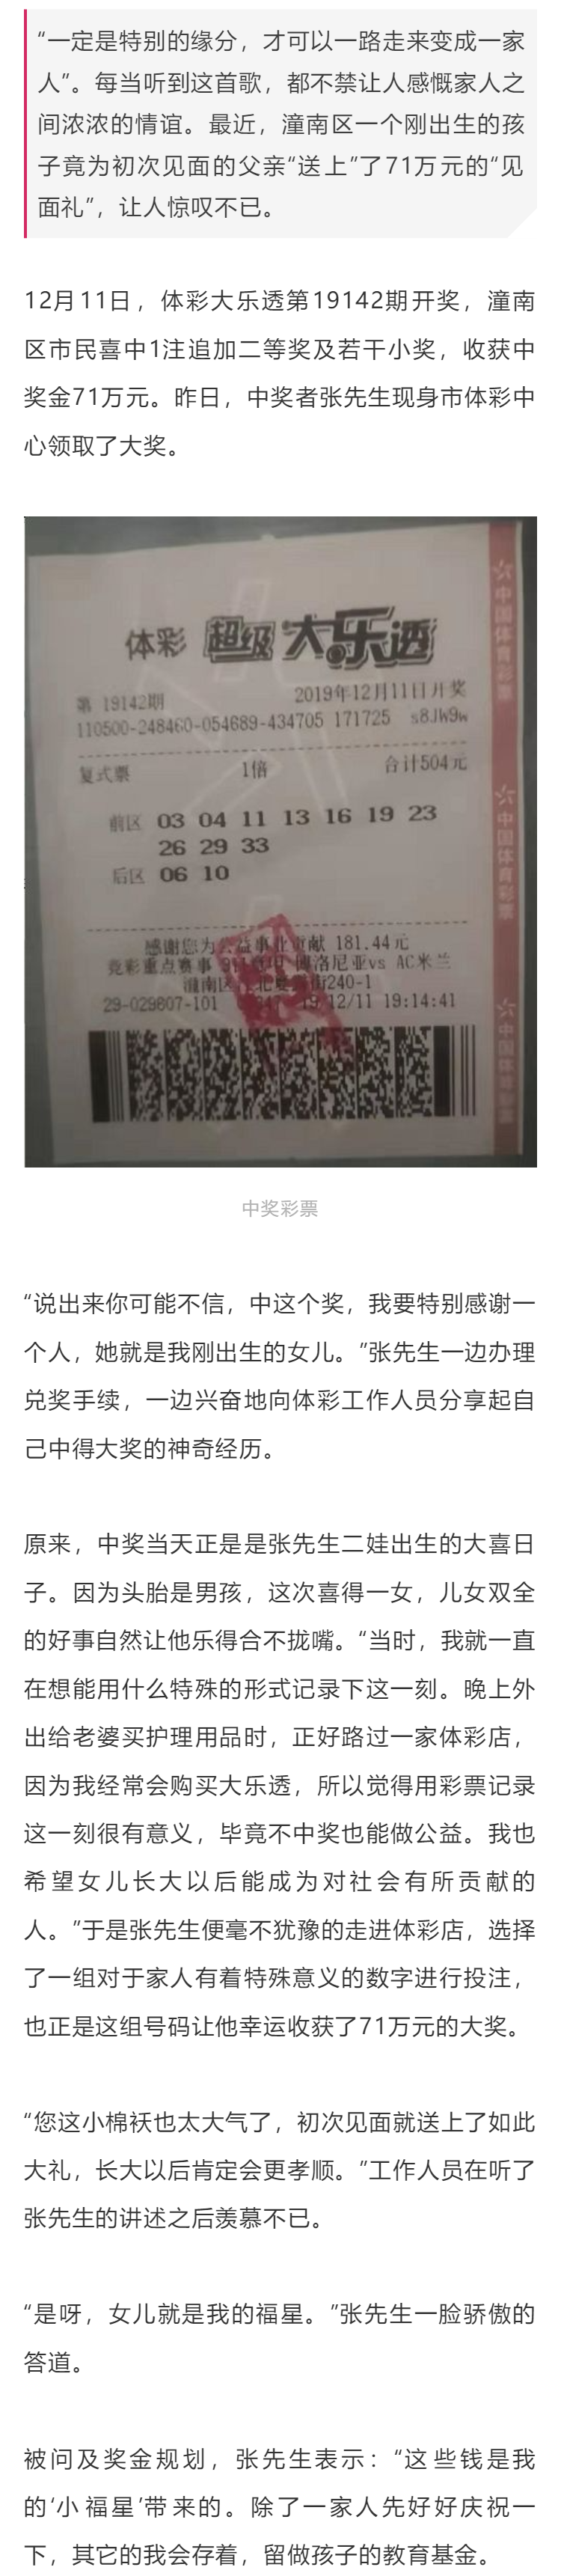 20191227_1554_yiban_screenshot.png